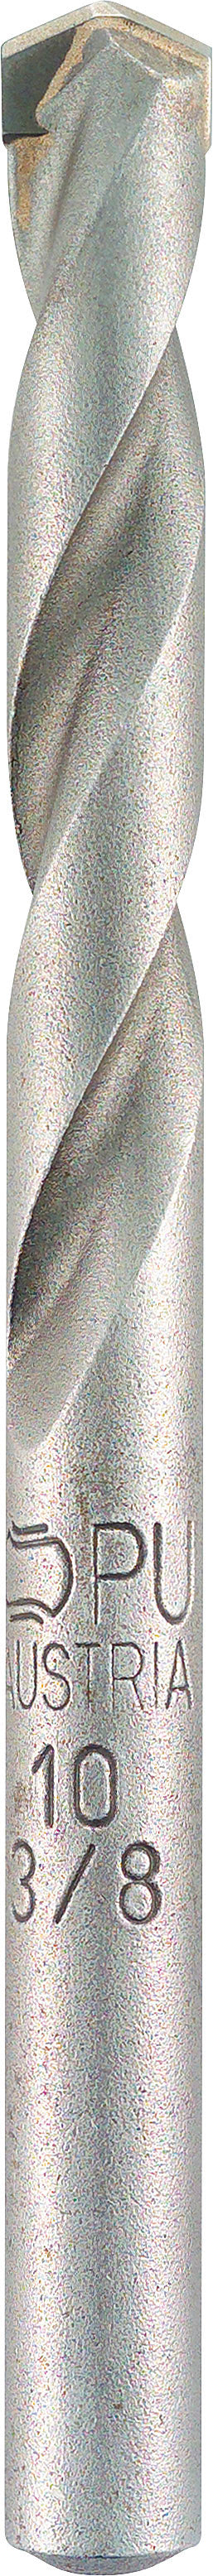 alpen-masonry-drill-bit-long-life-4.0-x-150mm-alp71804-1